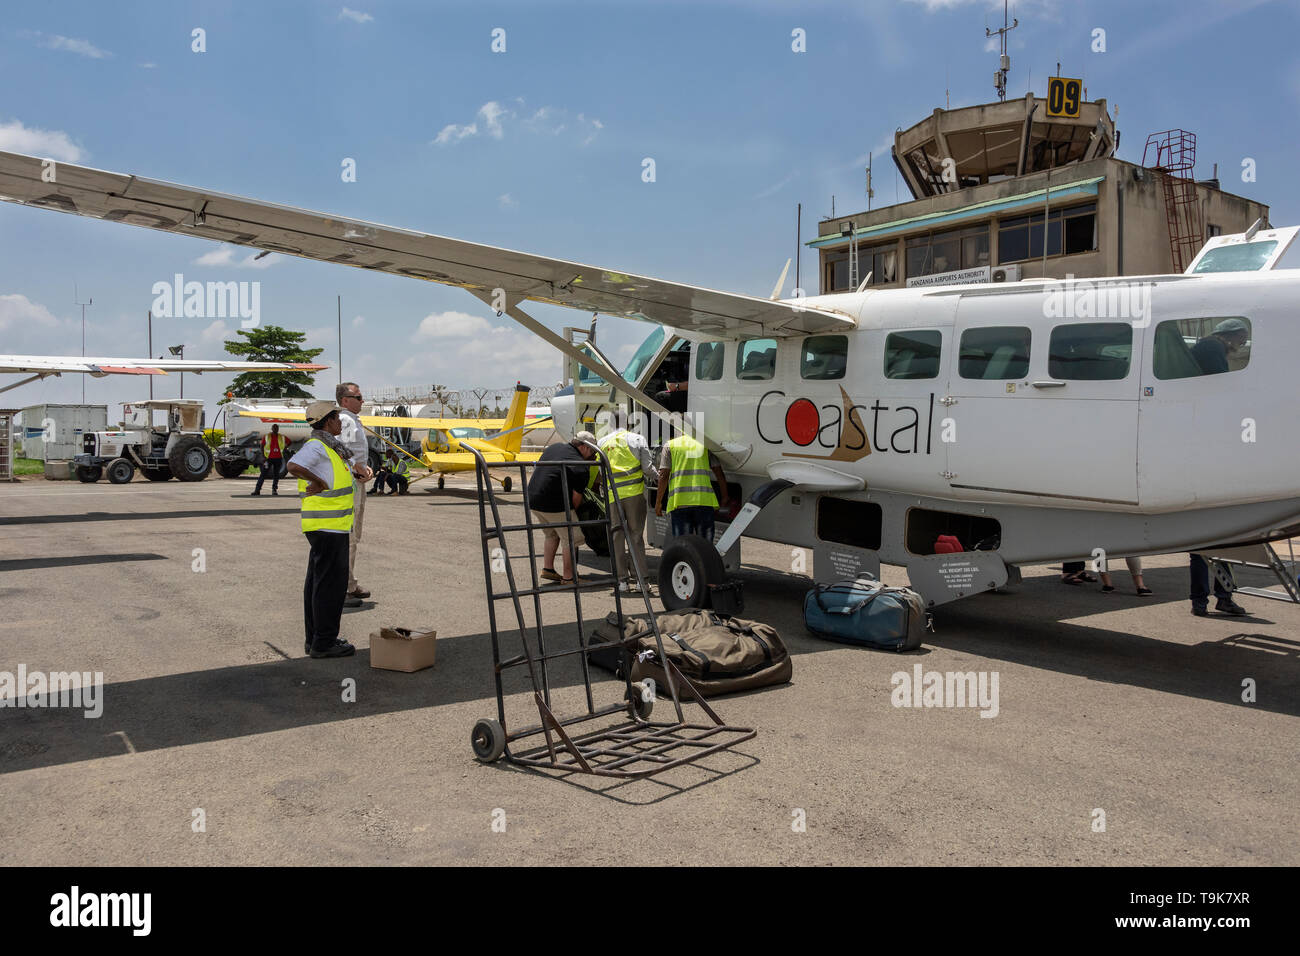 Coastal Air plane unloading at Arusha Airport, Tanzania Stock Photo